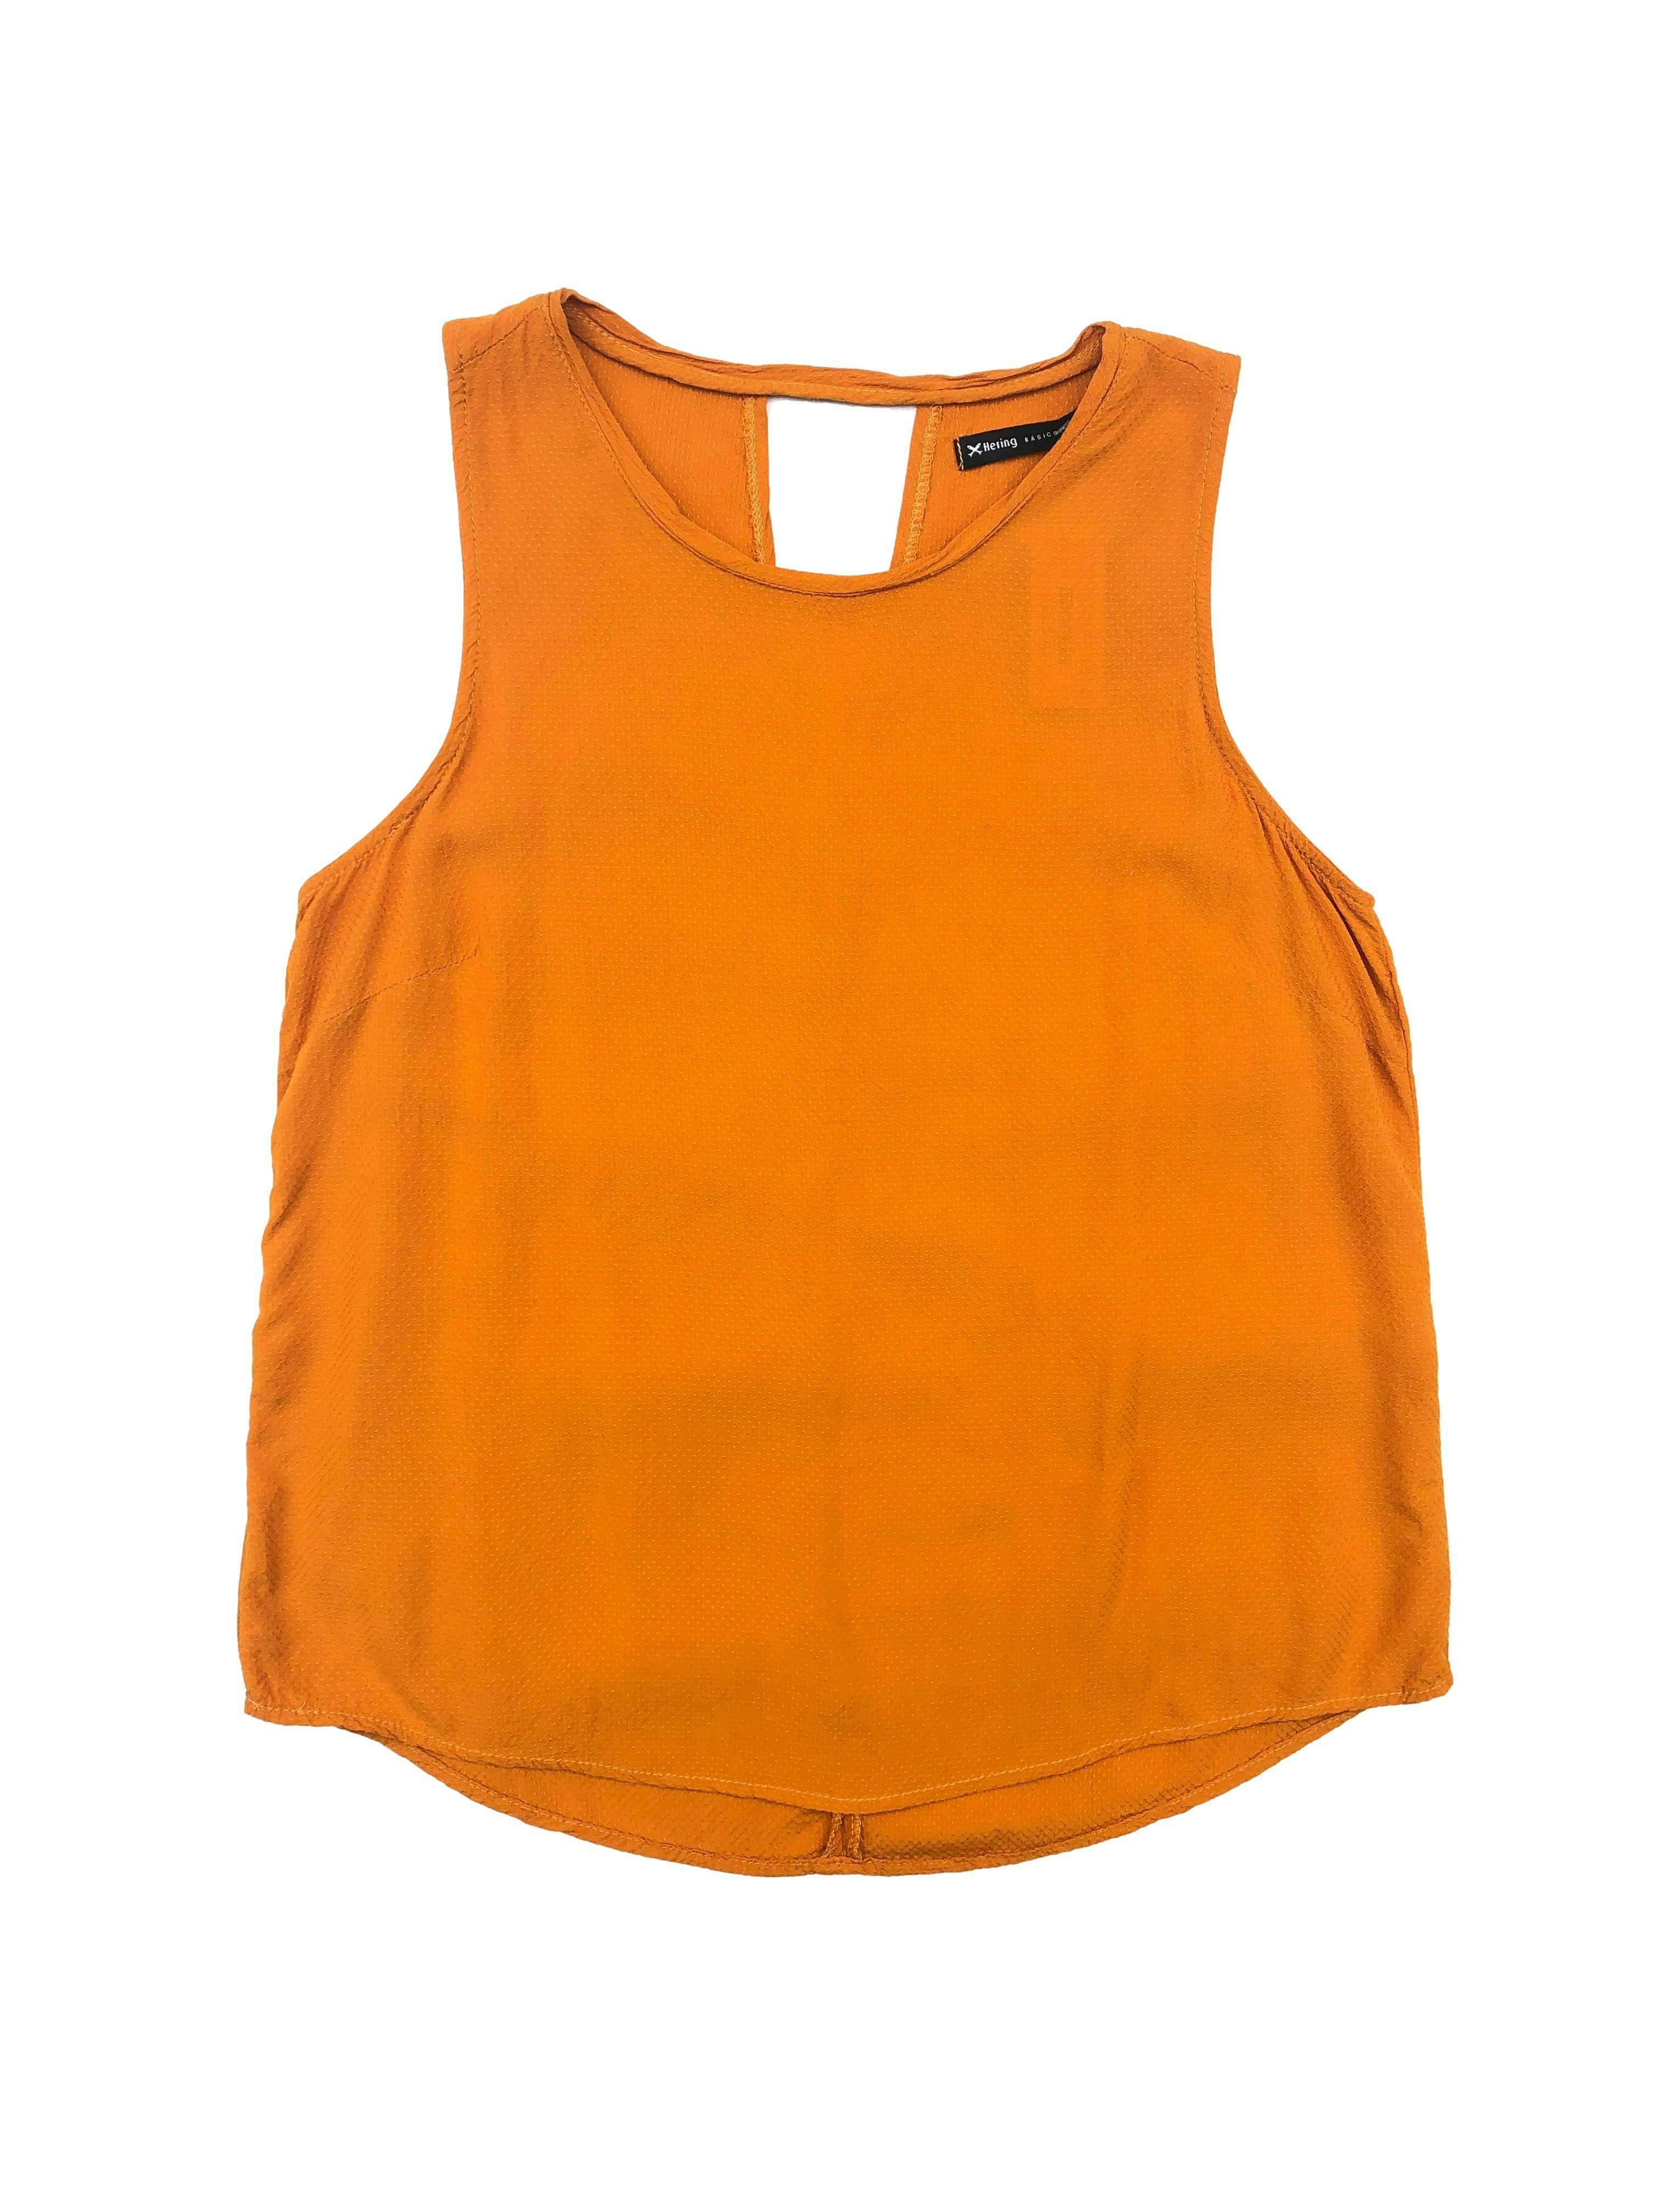 Blusa Hering naranja calabaza de chalis texturizado, abertura posterior. Busto 100cm, Largo 55cm.